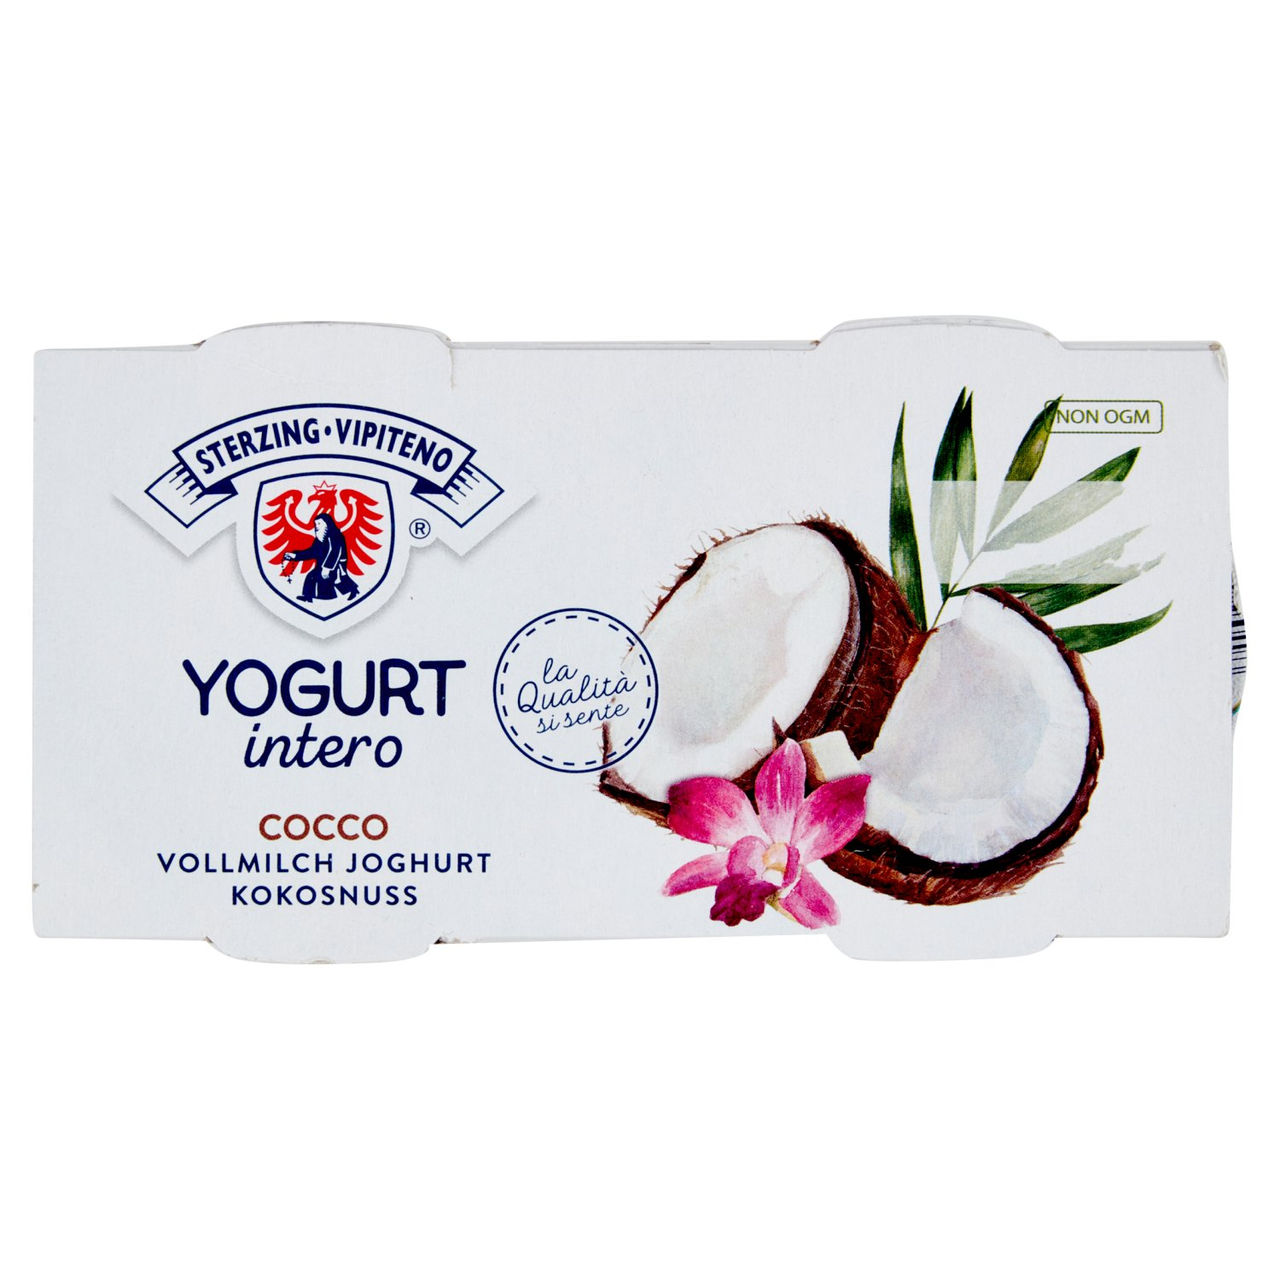 Sterzing Vipiteno Yogurt Cocco in vendita online